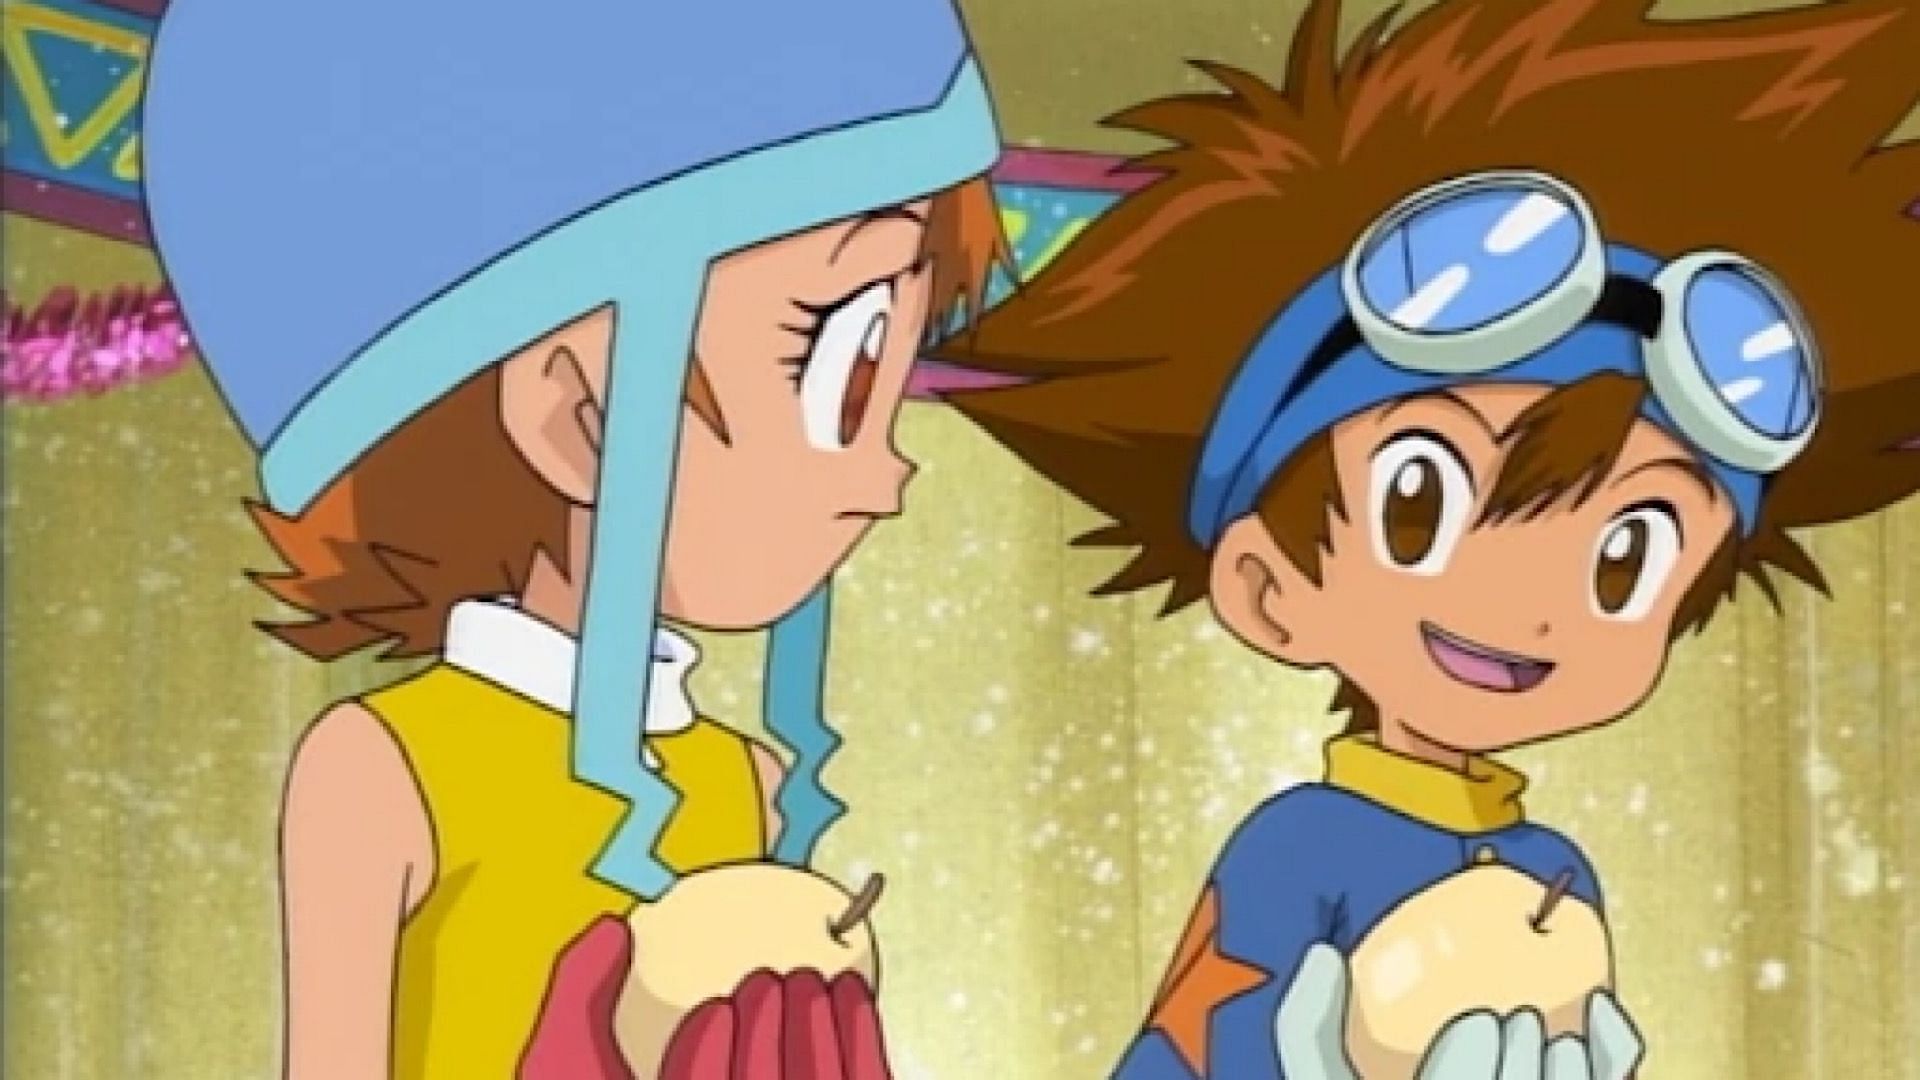 Taichi and Sora (Image via Digimon Anime)